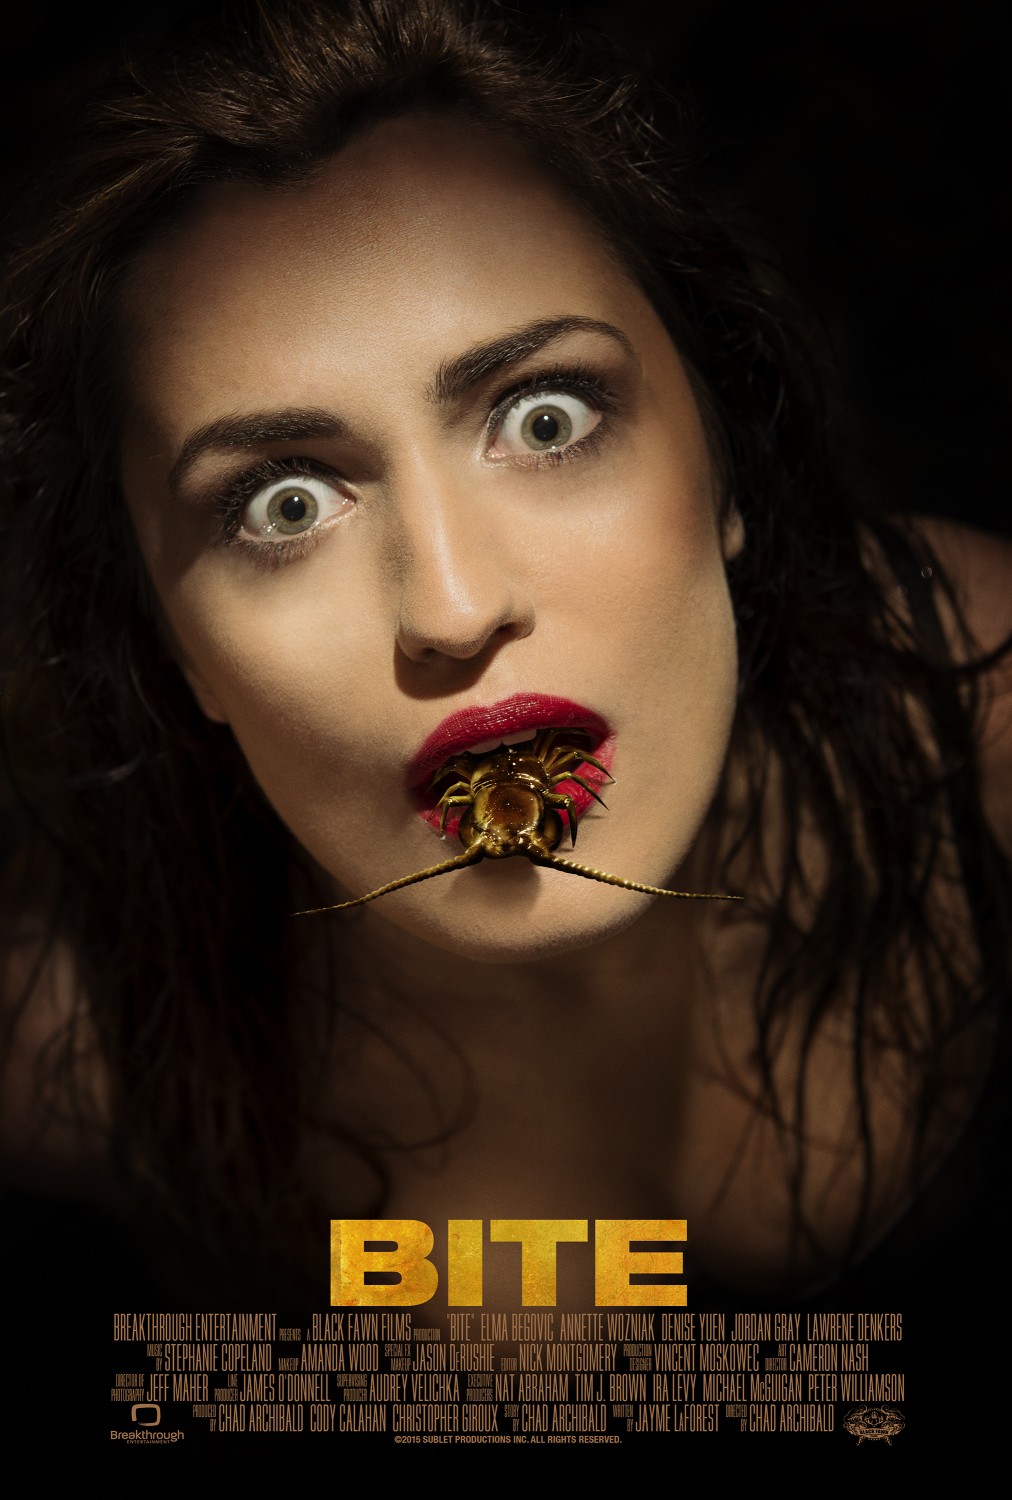 Bite (2015) Online Watch Full HD Movies Online Free